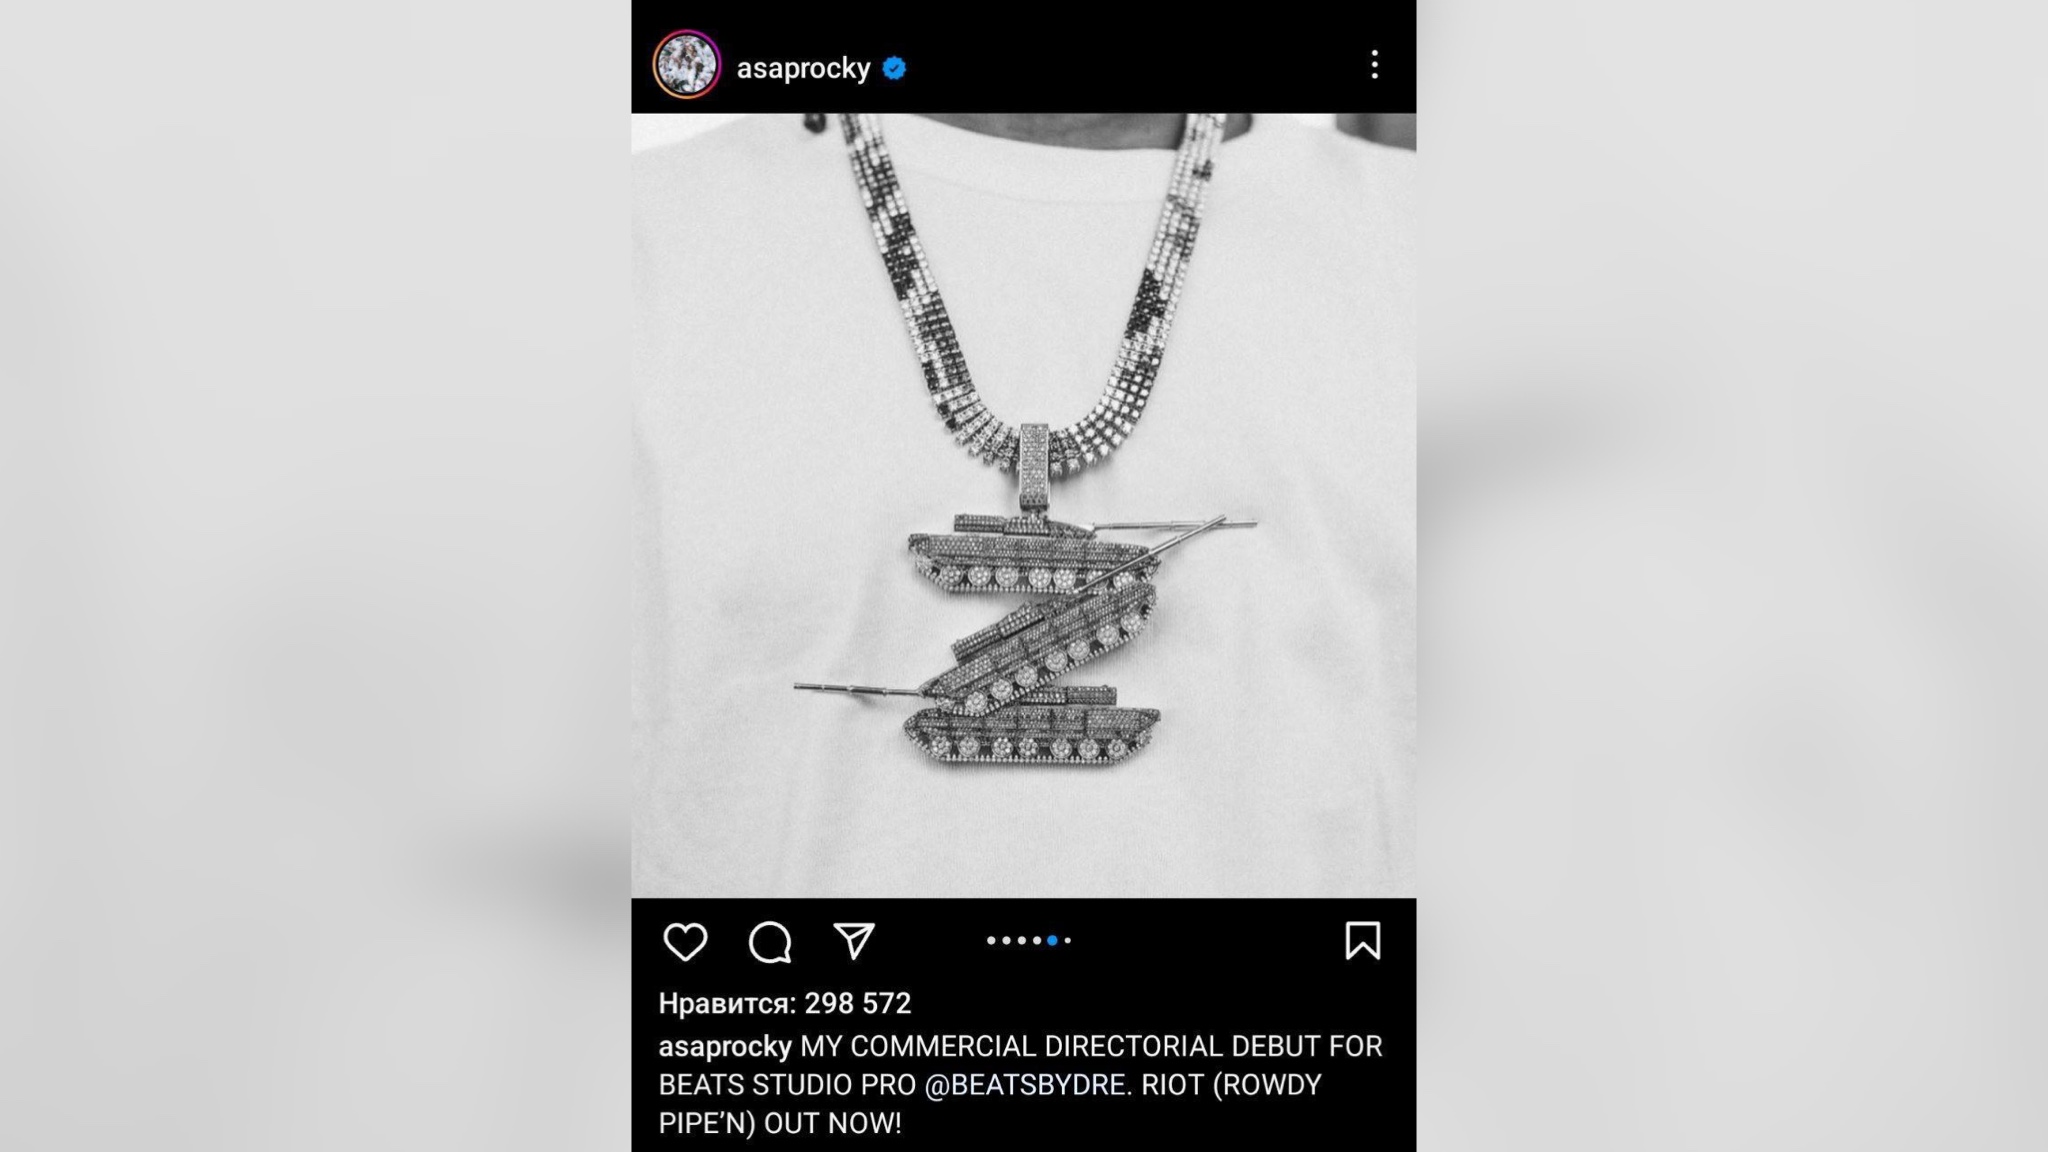 Кулон в виде Z из танков, за который отменяют A$AP Rocky. Фото © Instagram (Запрещён в РФ) / asaprocky